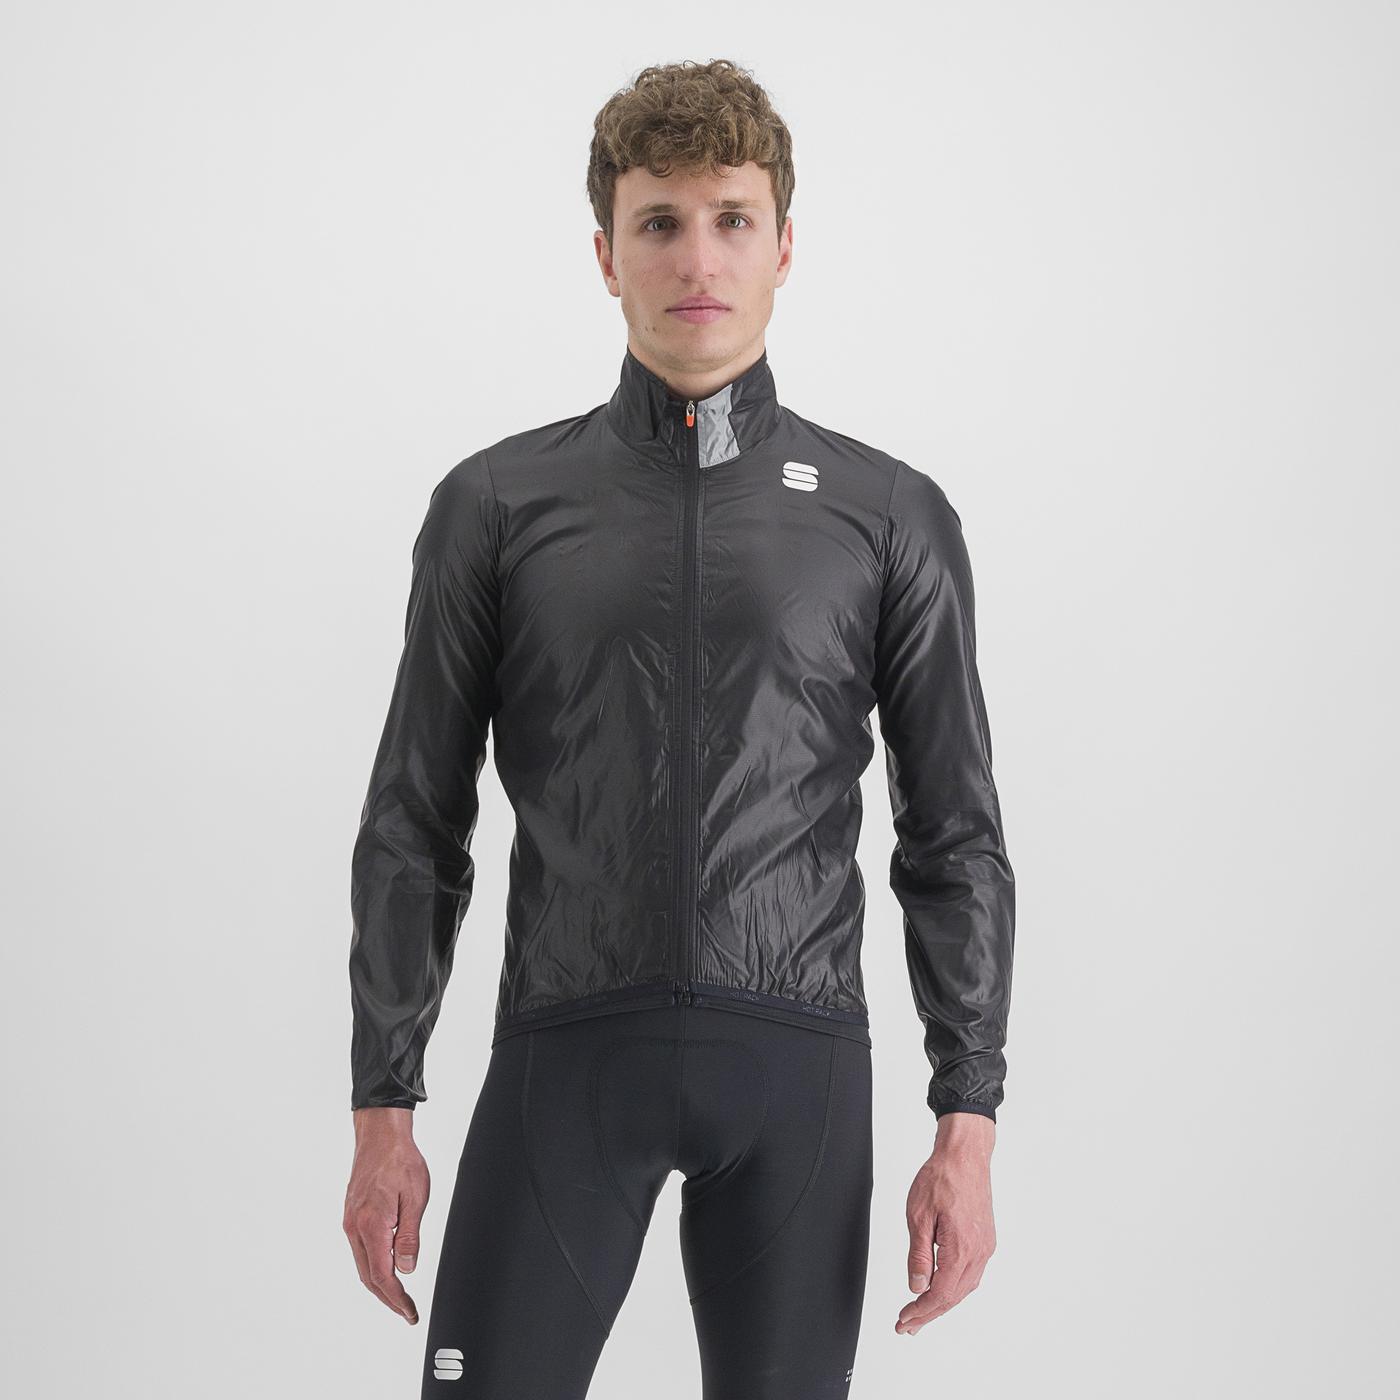 Sportful Reflex Jacket - Cycling jacket Kids, Product Review